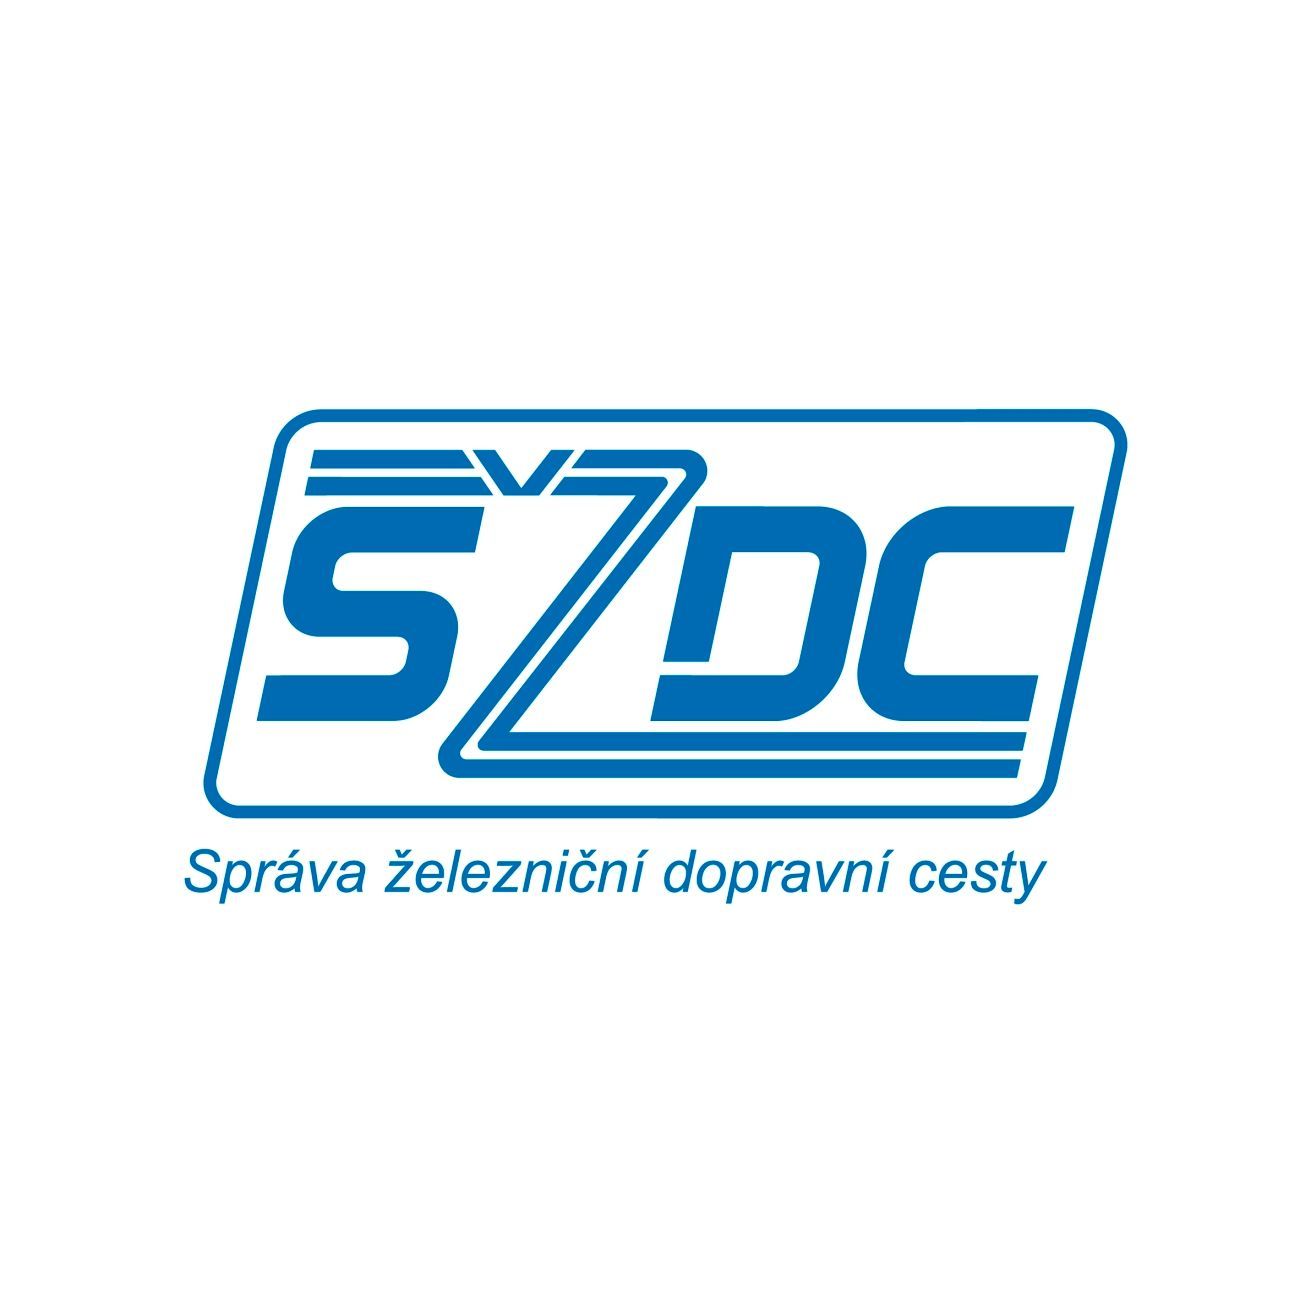 Logo SŽDC